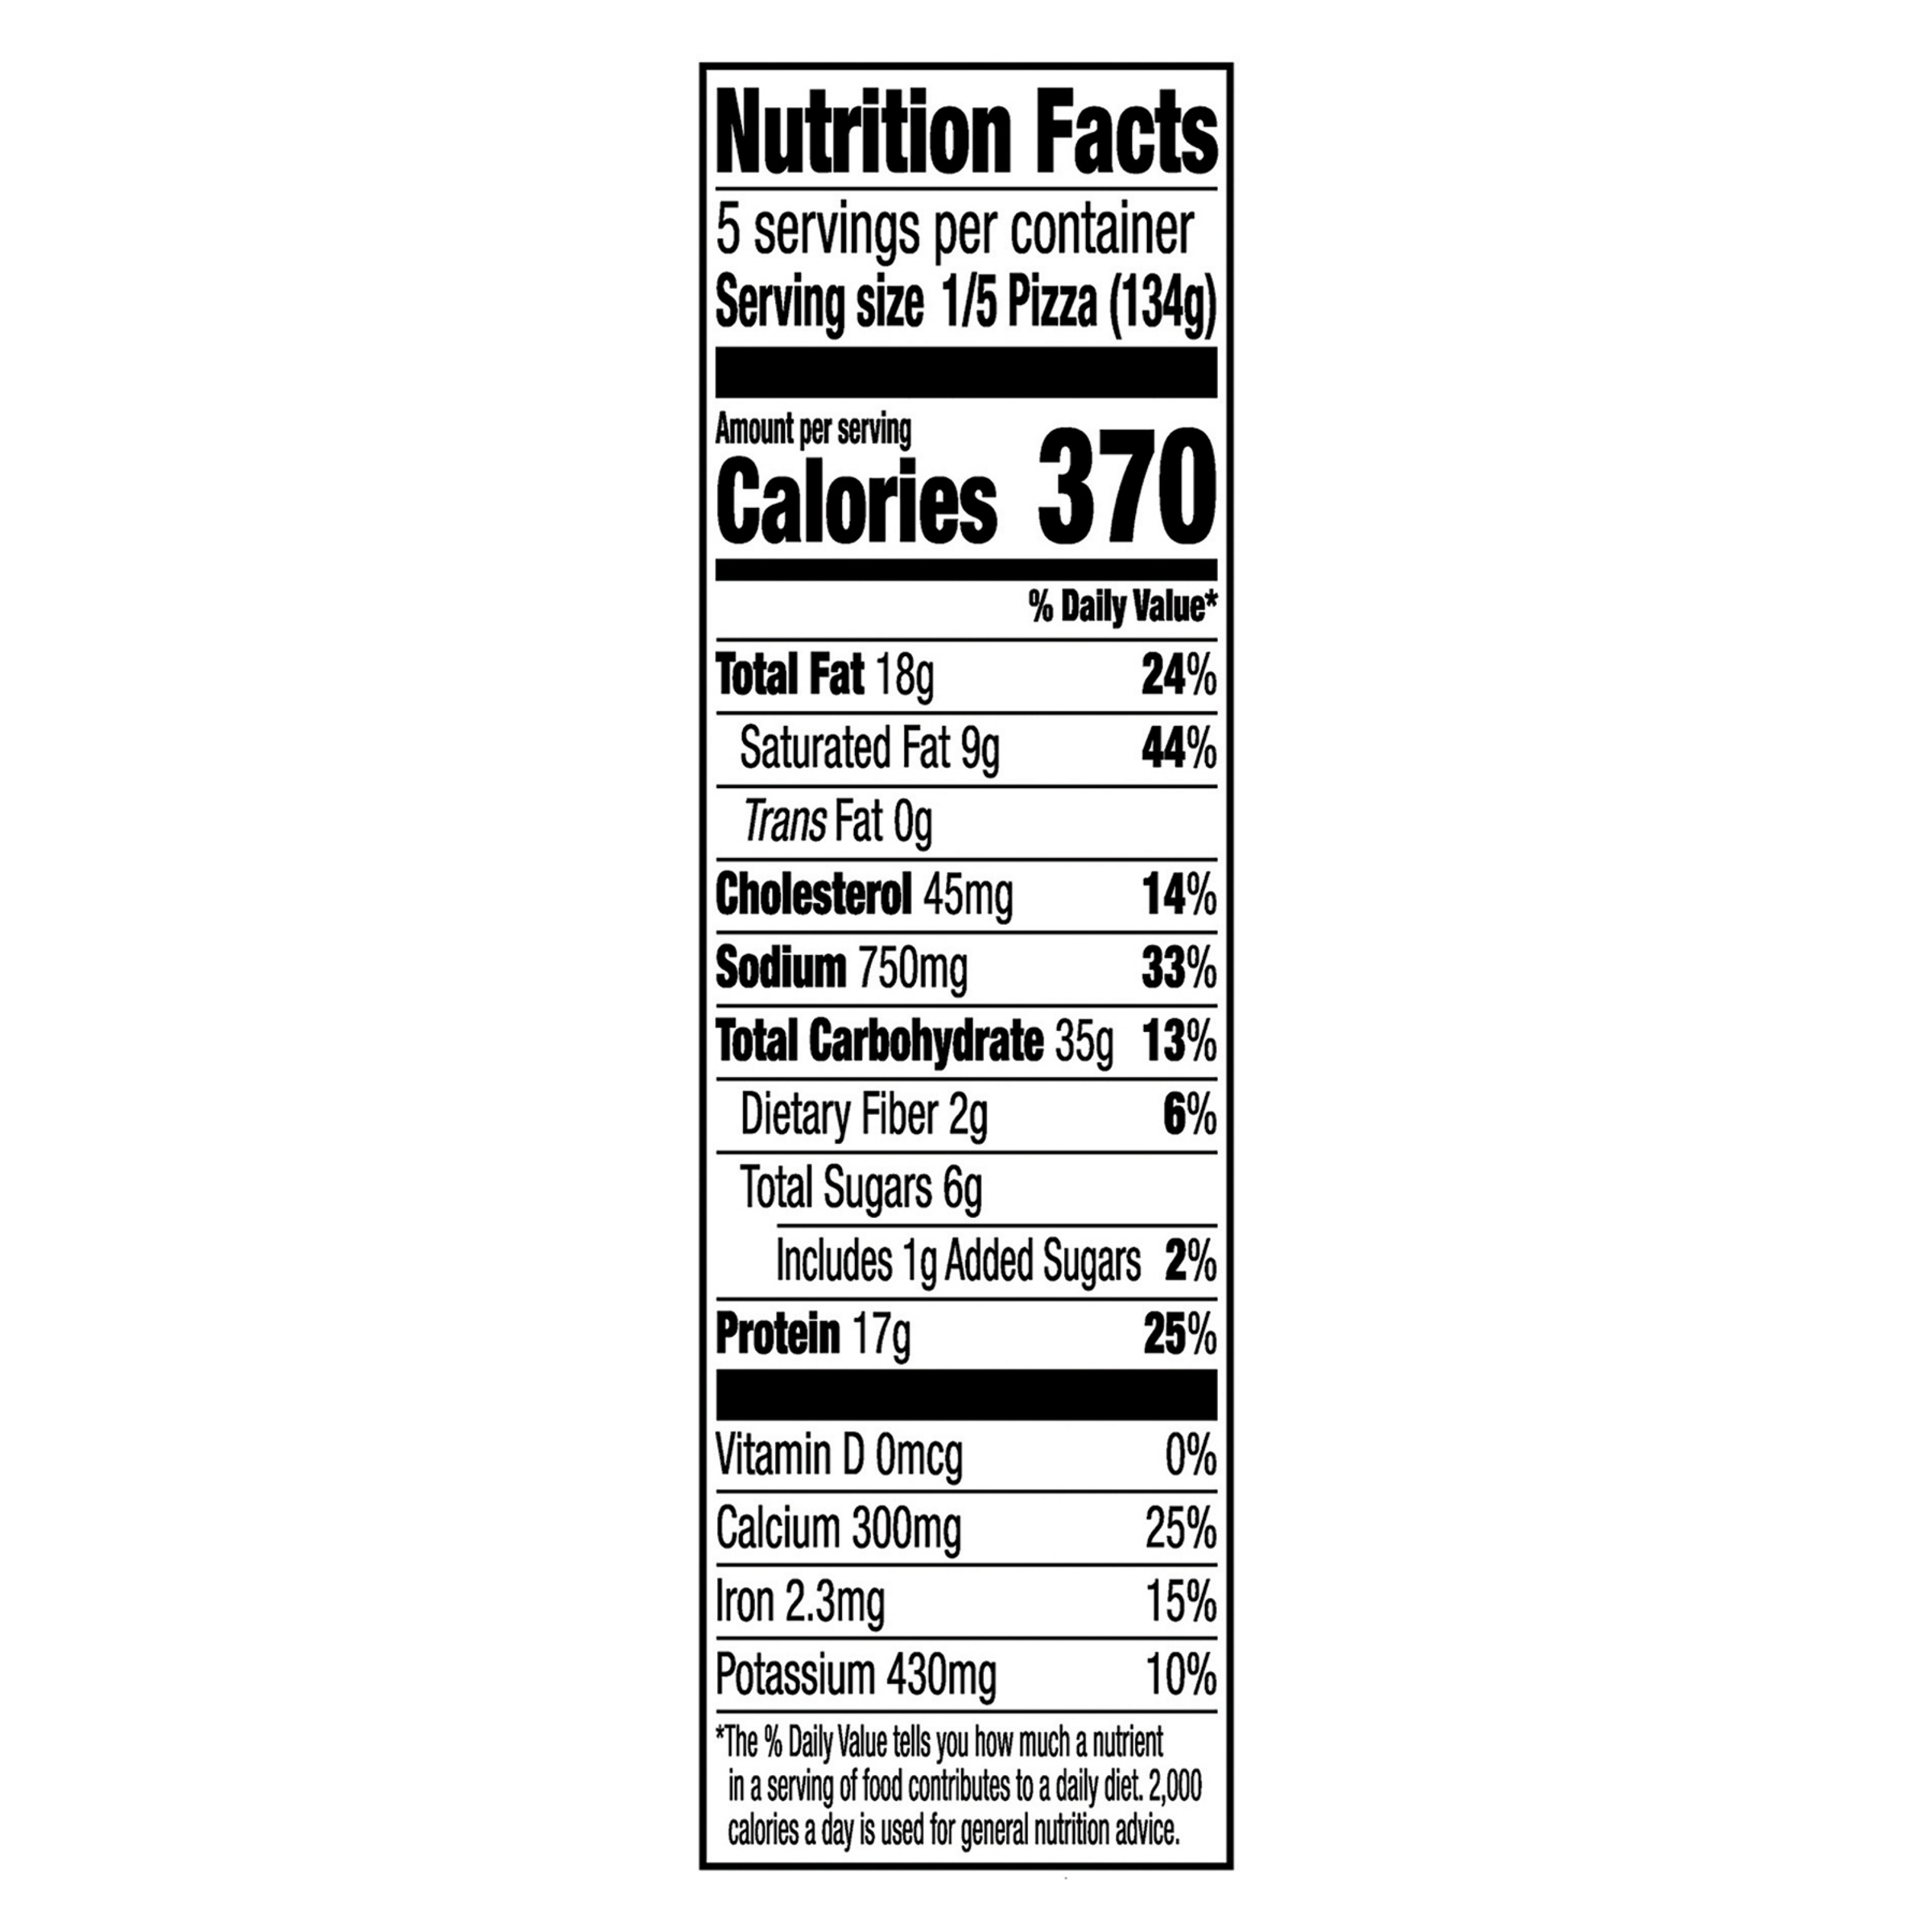 Nutrition Facts Serving Size 1/5 Pizza (134g)
				Servings per container	5
				Calories	 370
				Total Fat 18 g
				% DV 24%
				Saturated Fat 9 g
				% DV 44%
				Trans Fat 0 g
				Cholesterol 45 mg
				% DV 14%
				Sodium 750 mg
				% DV 33%
				Total Carbohydrate 35 g
				% DV 13%
				Dietary Fiber 2 g
				% DV 6%
				Total Sugars 6 g
				Added Sugars 1 g
				% DV 2%
				Protein 17 g
				% DV 25%
				Vitamin D 0 MCG
				% DV 0%
				Calcium	 300 mg
				% DV 25%
				Iron 2.3 mg
				% DV 15%
				Potassium 430 mg
				% DV 10%